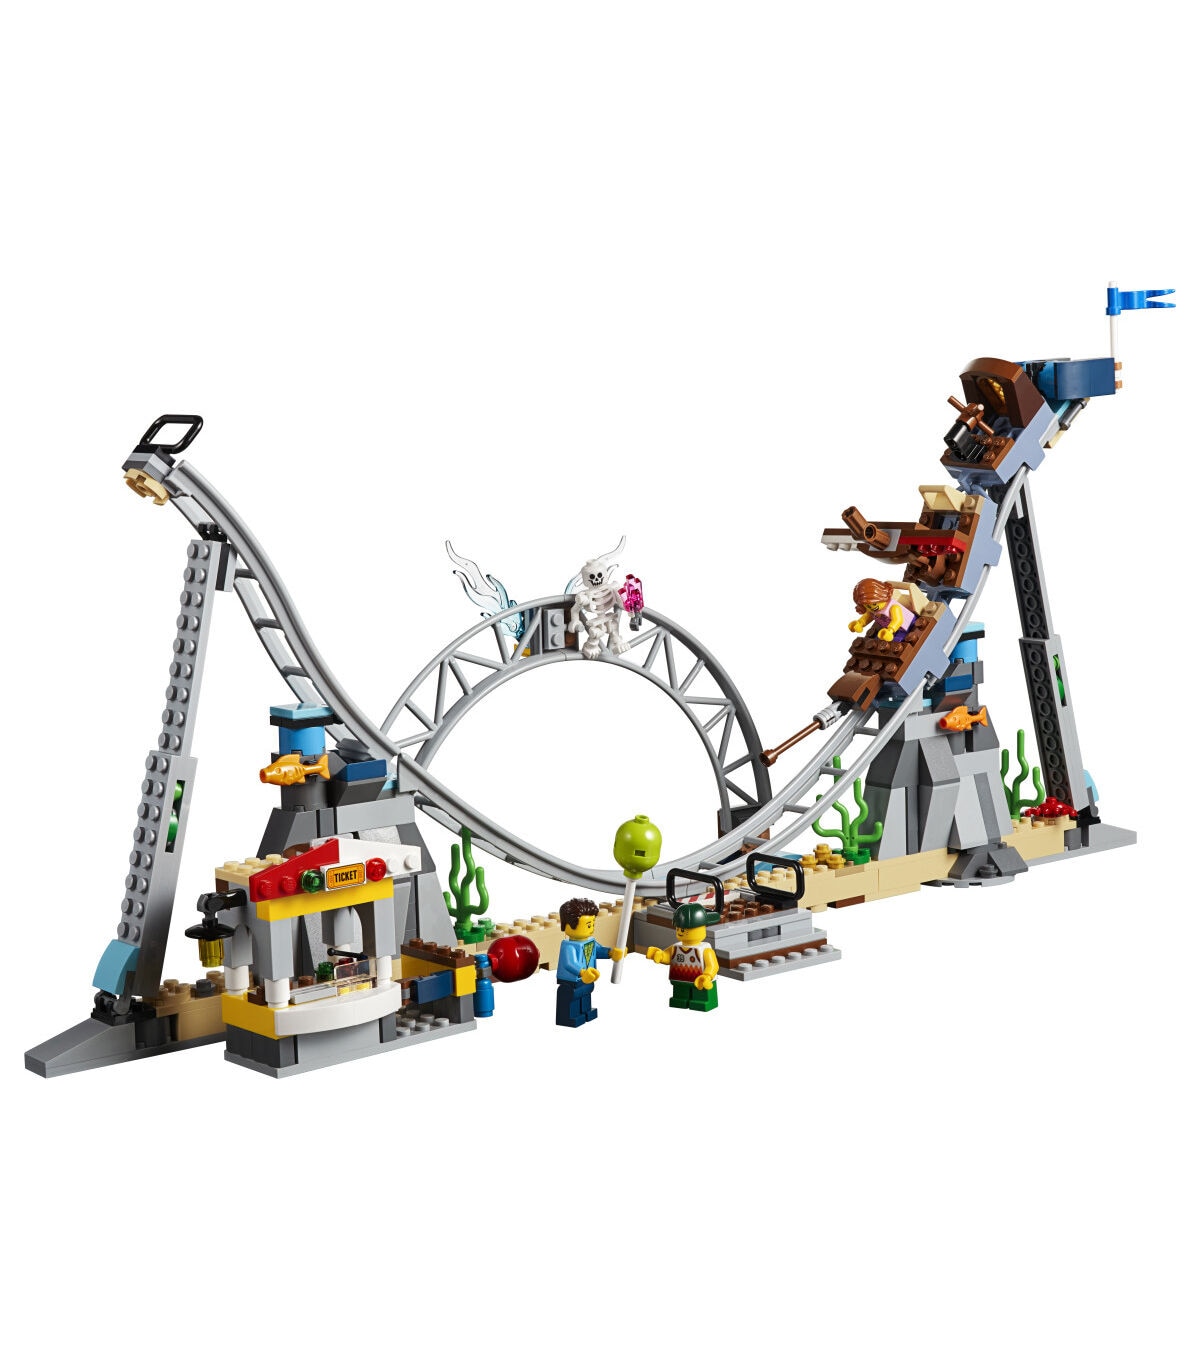 lego creator 3in1 pirate roller coaster 31084